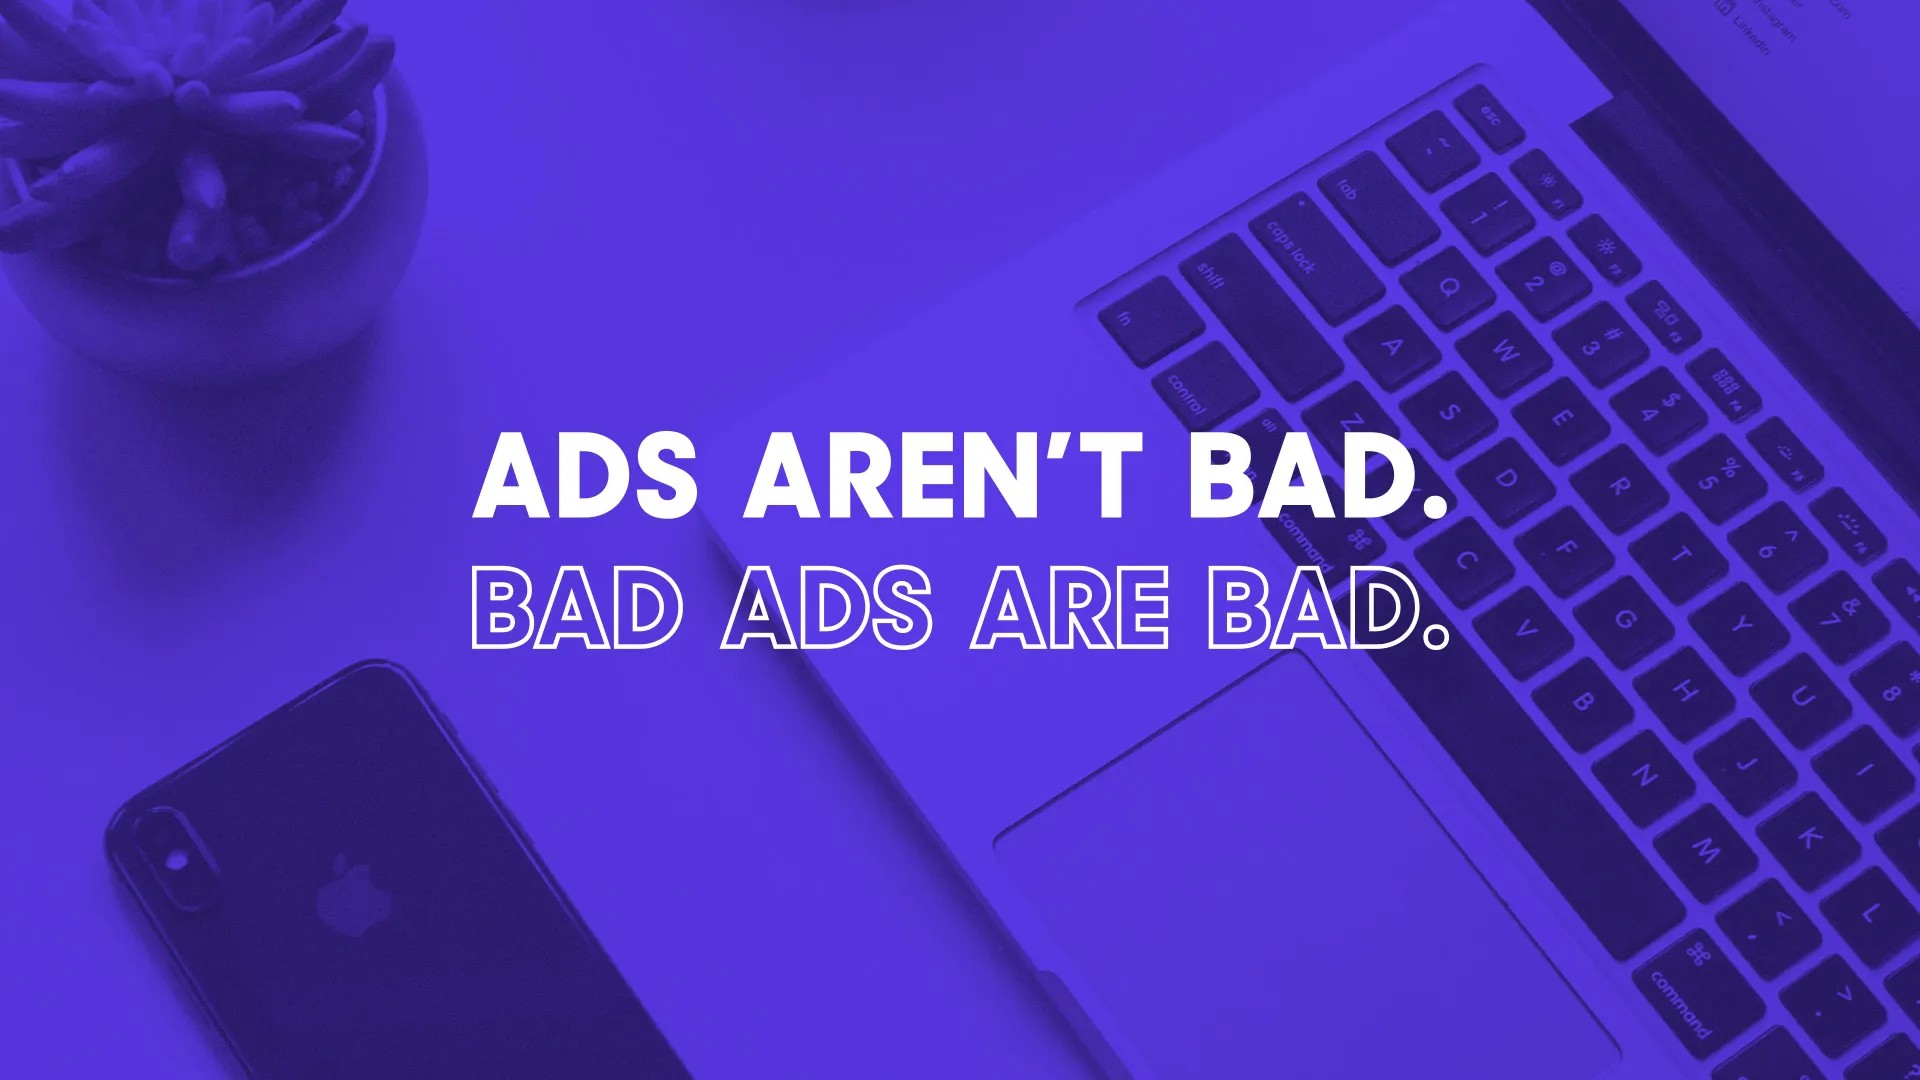 Ads aren't bad. Bad ads are bad.